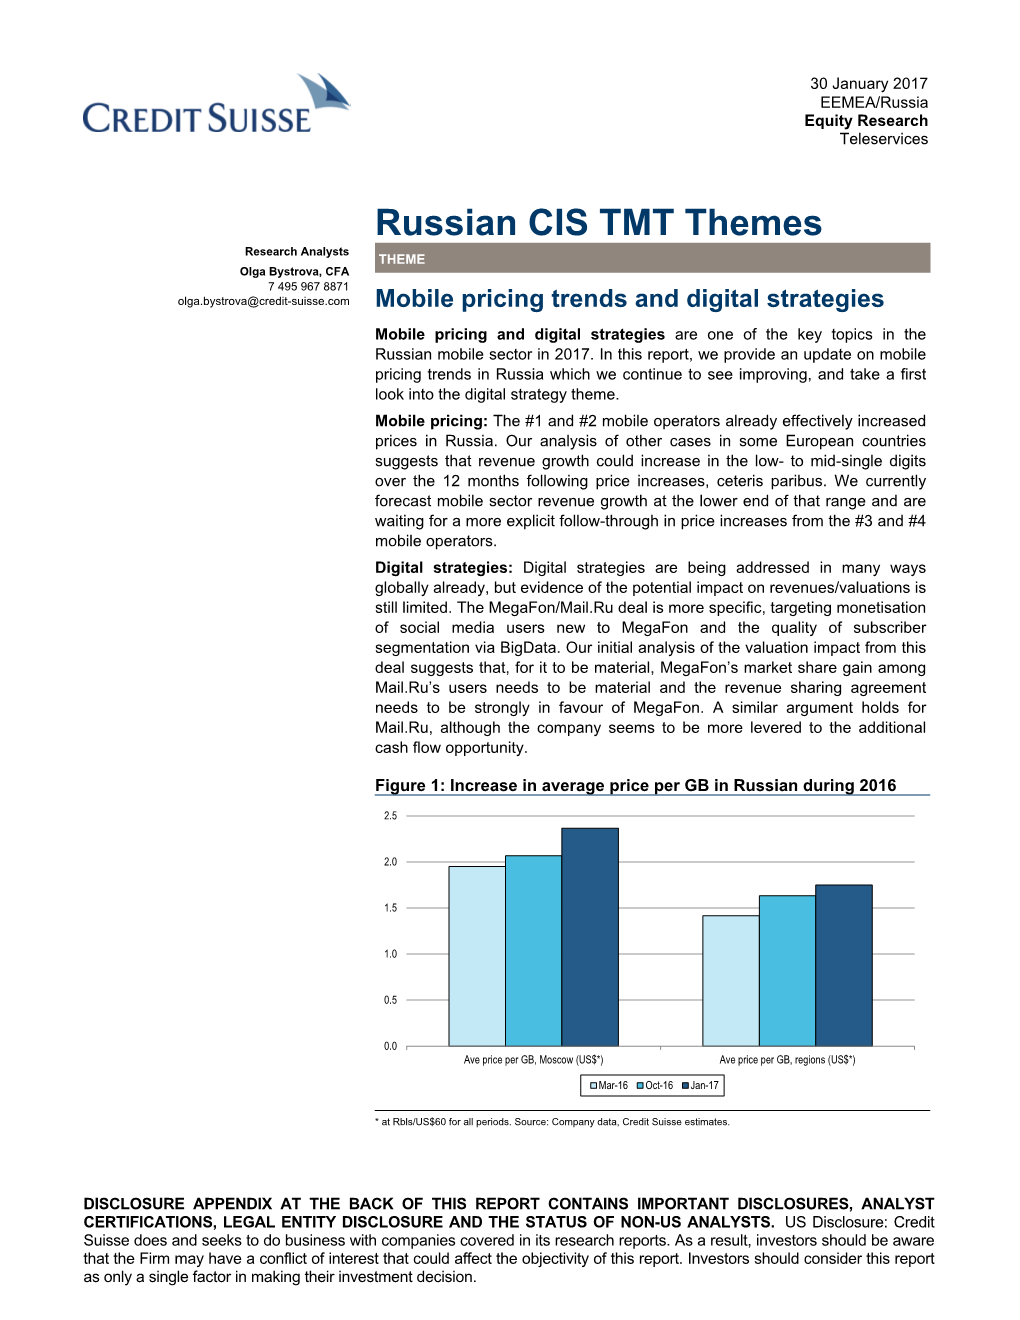 Russian CIS TMT Themes